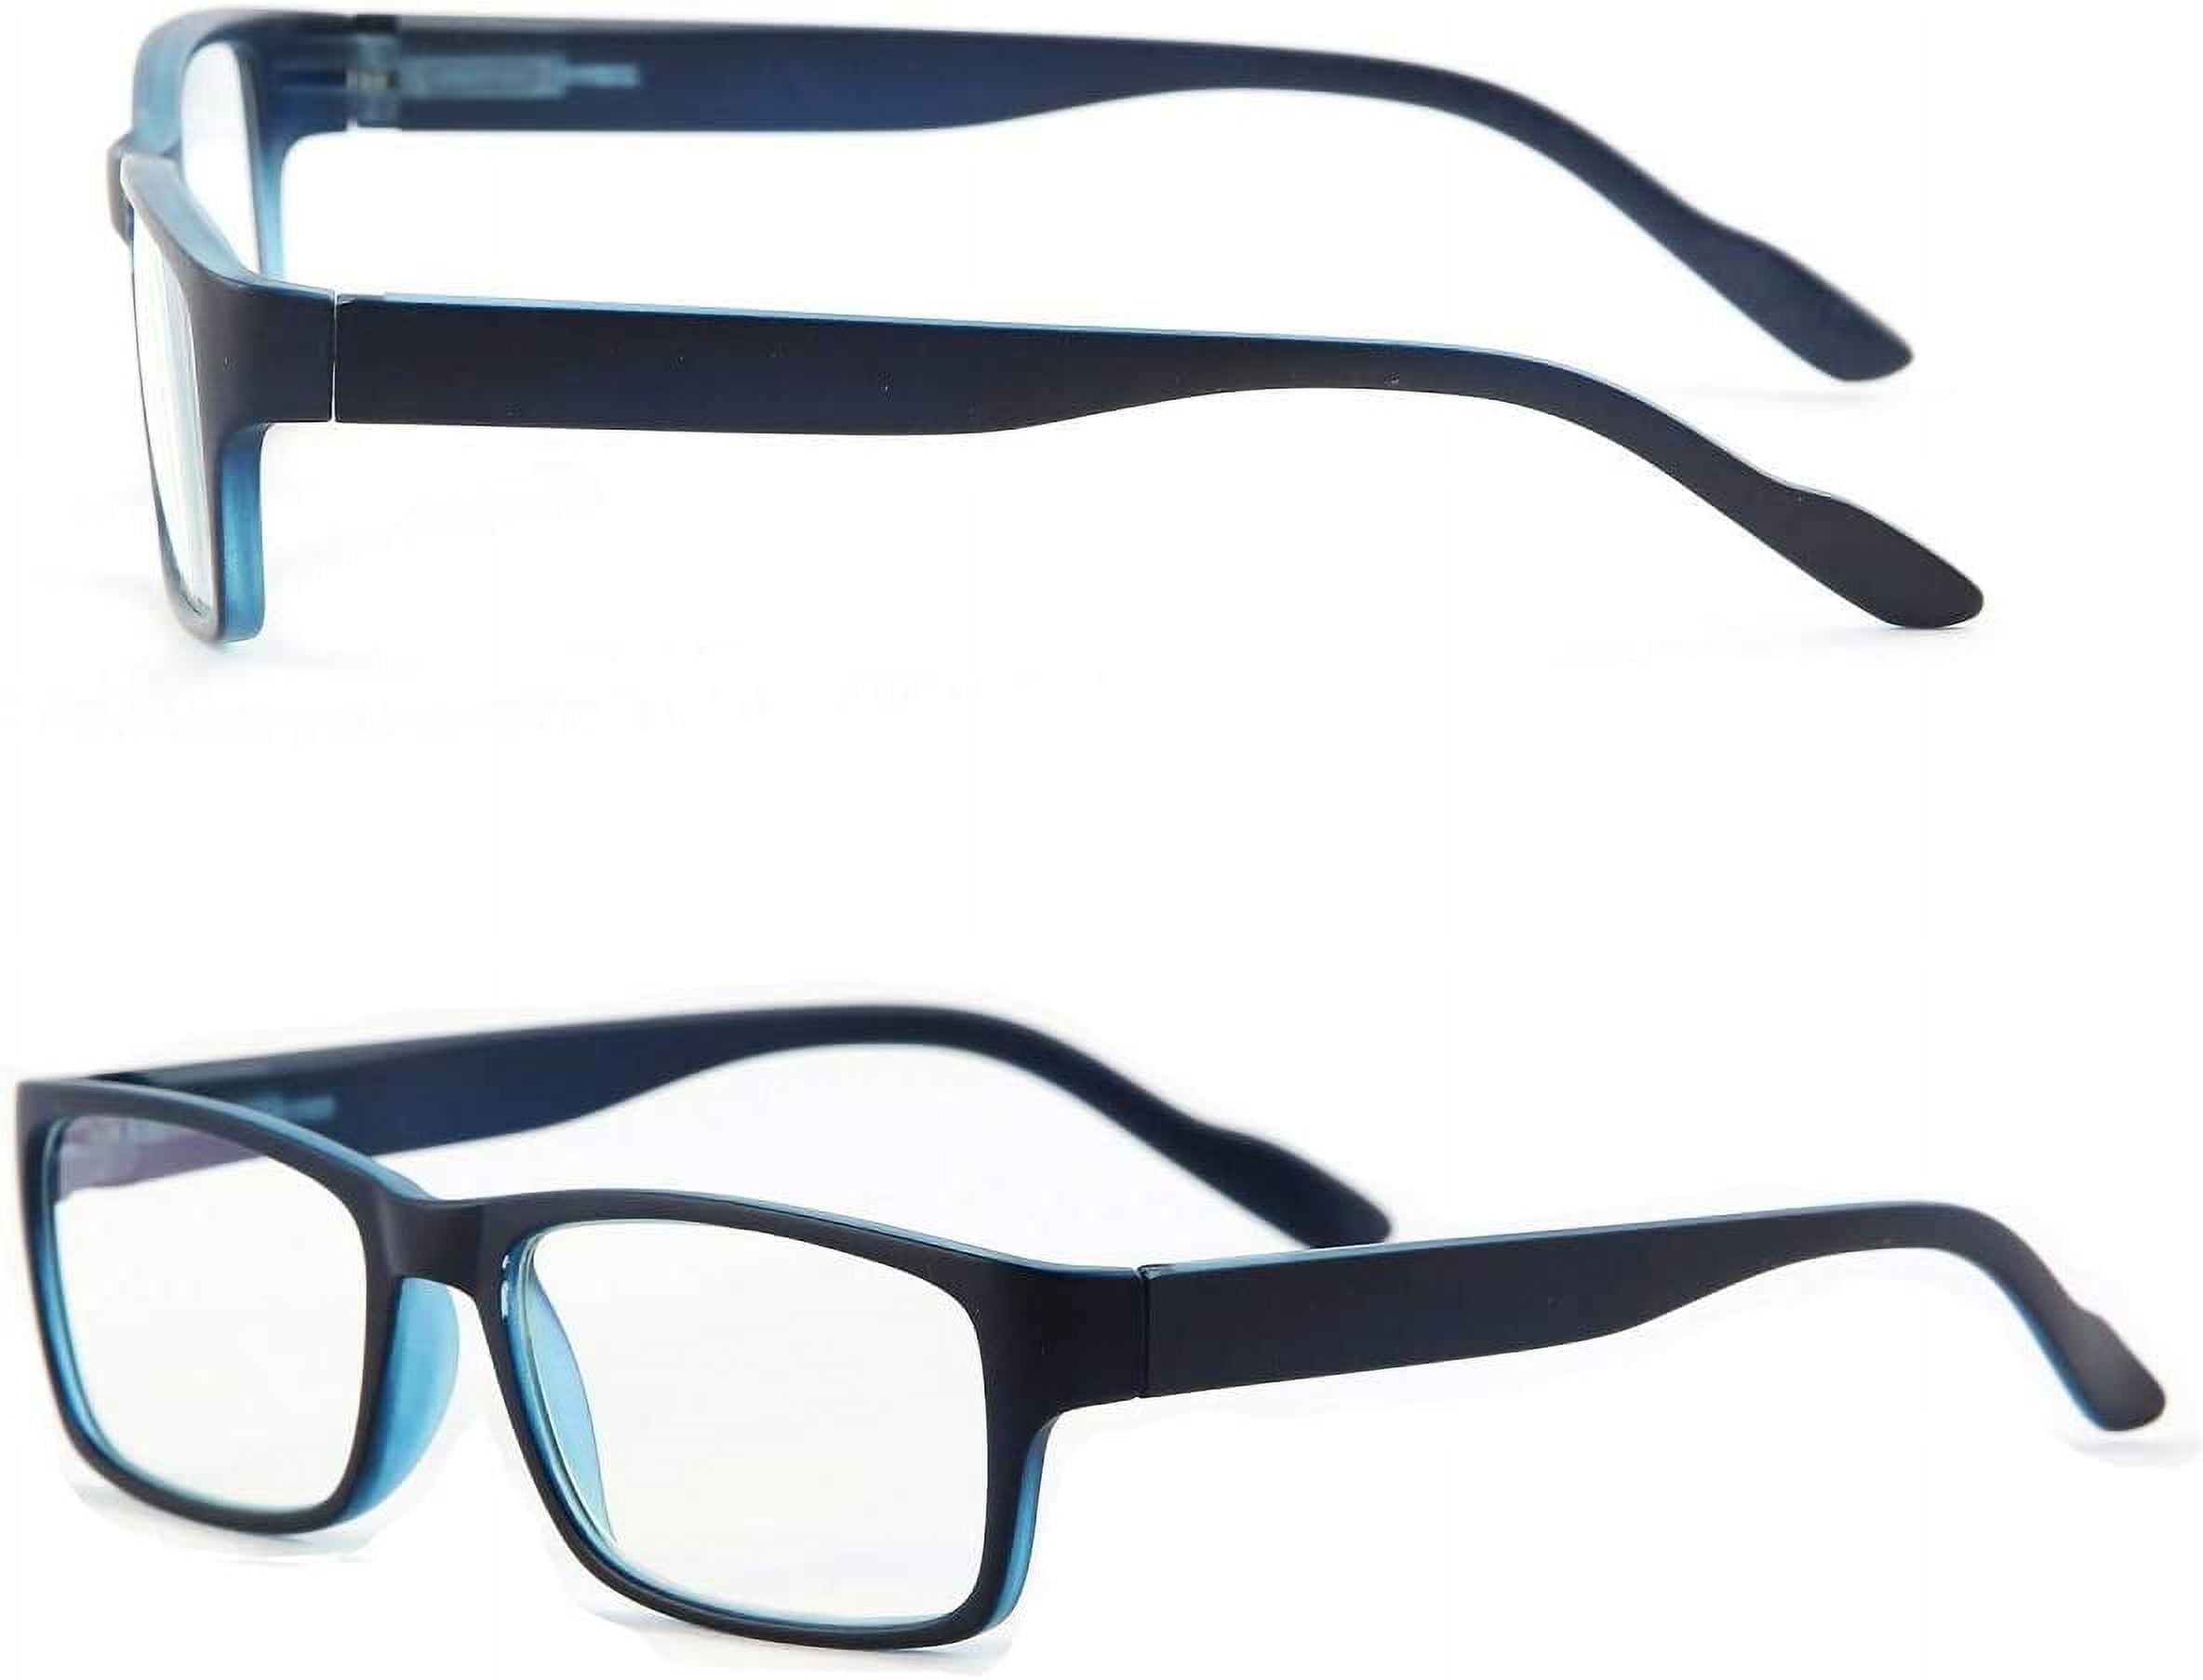 Readerest Blue Light Blocking Reading Glasses (Black, 1.50 Magnification) Computer, Black 0.0 Magnification